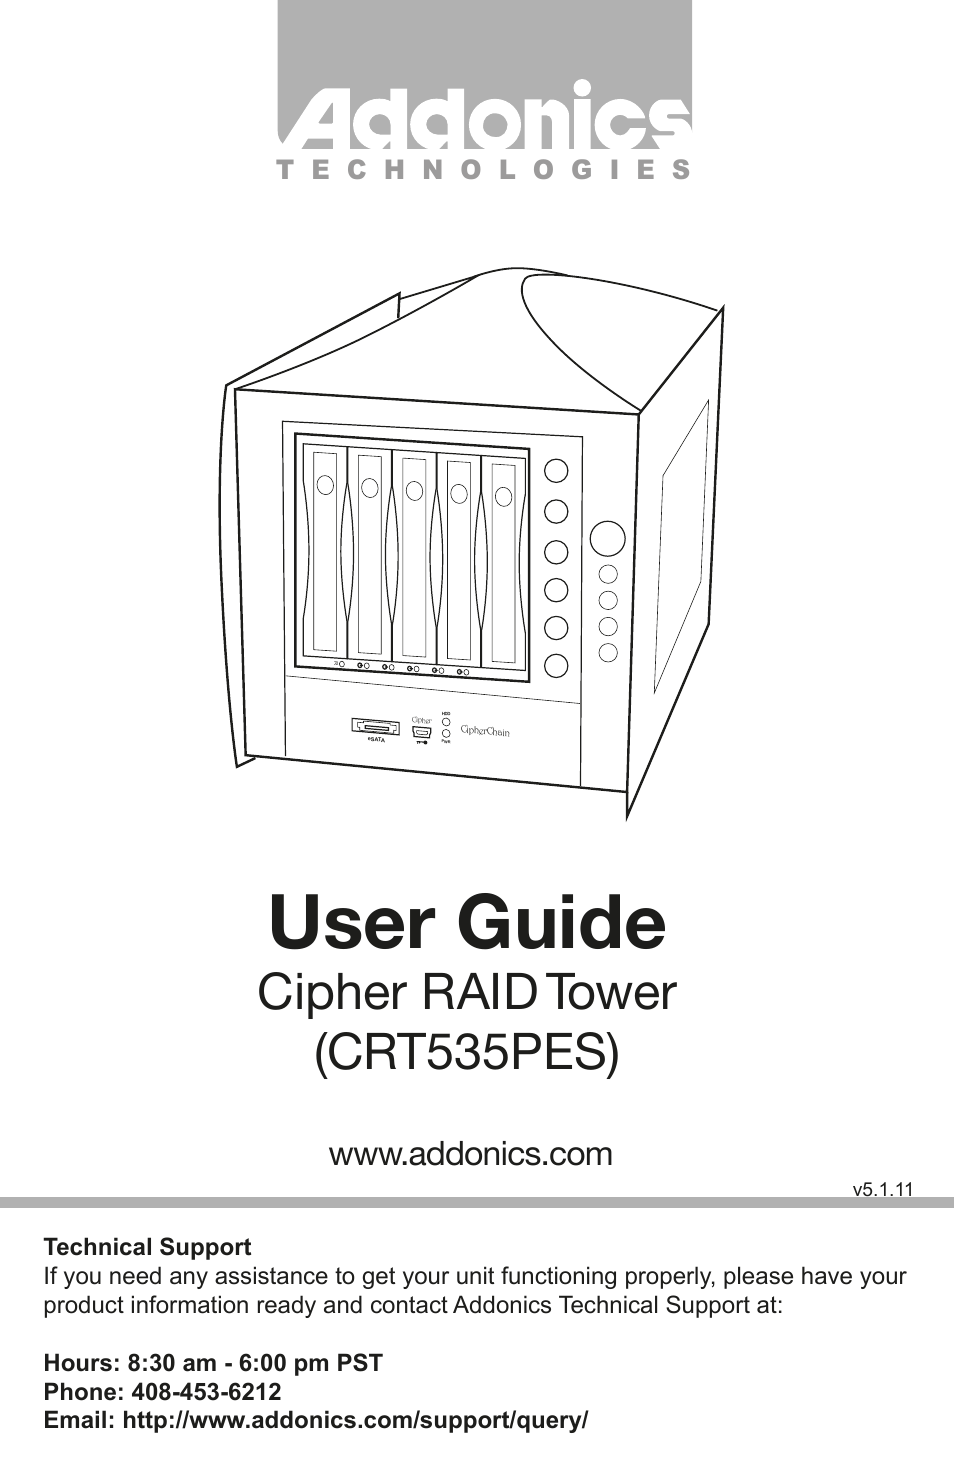 CIPHER RAID TOWER CRT535PES